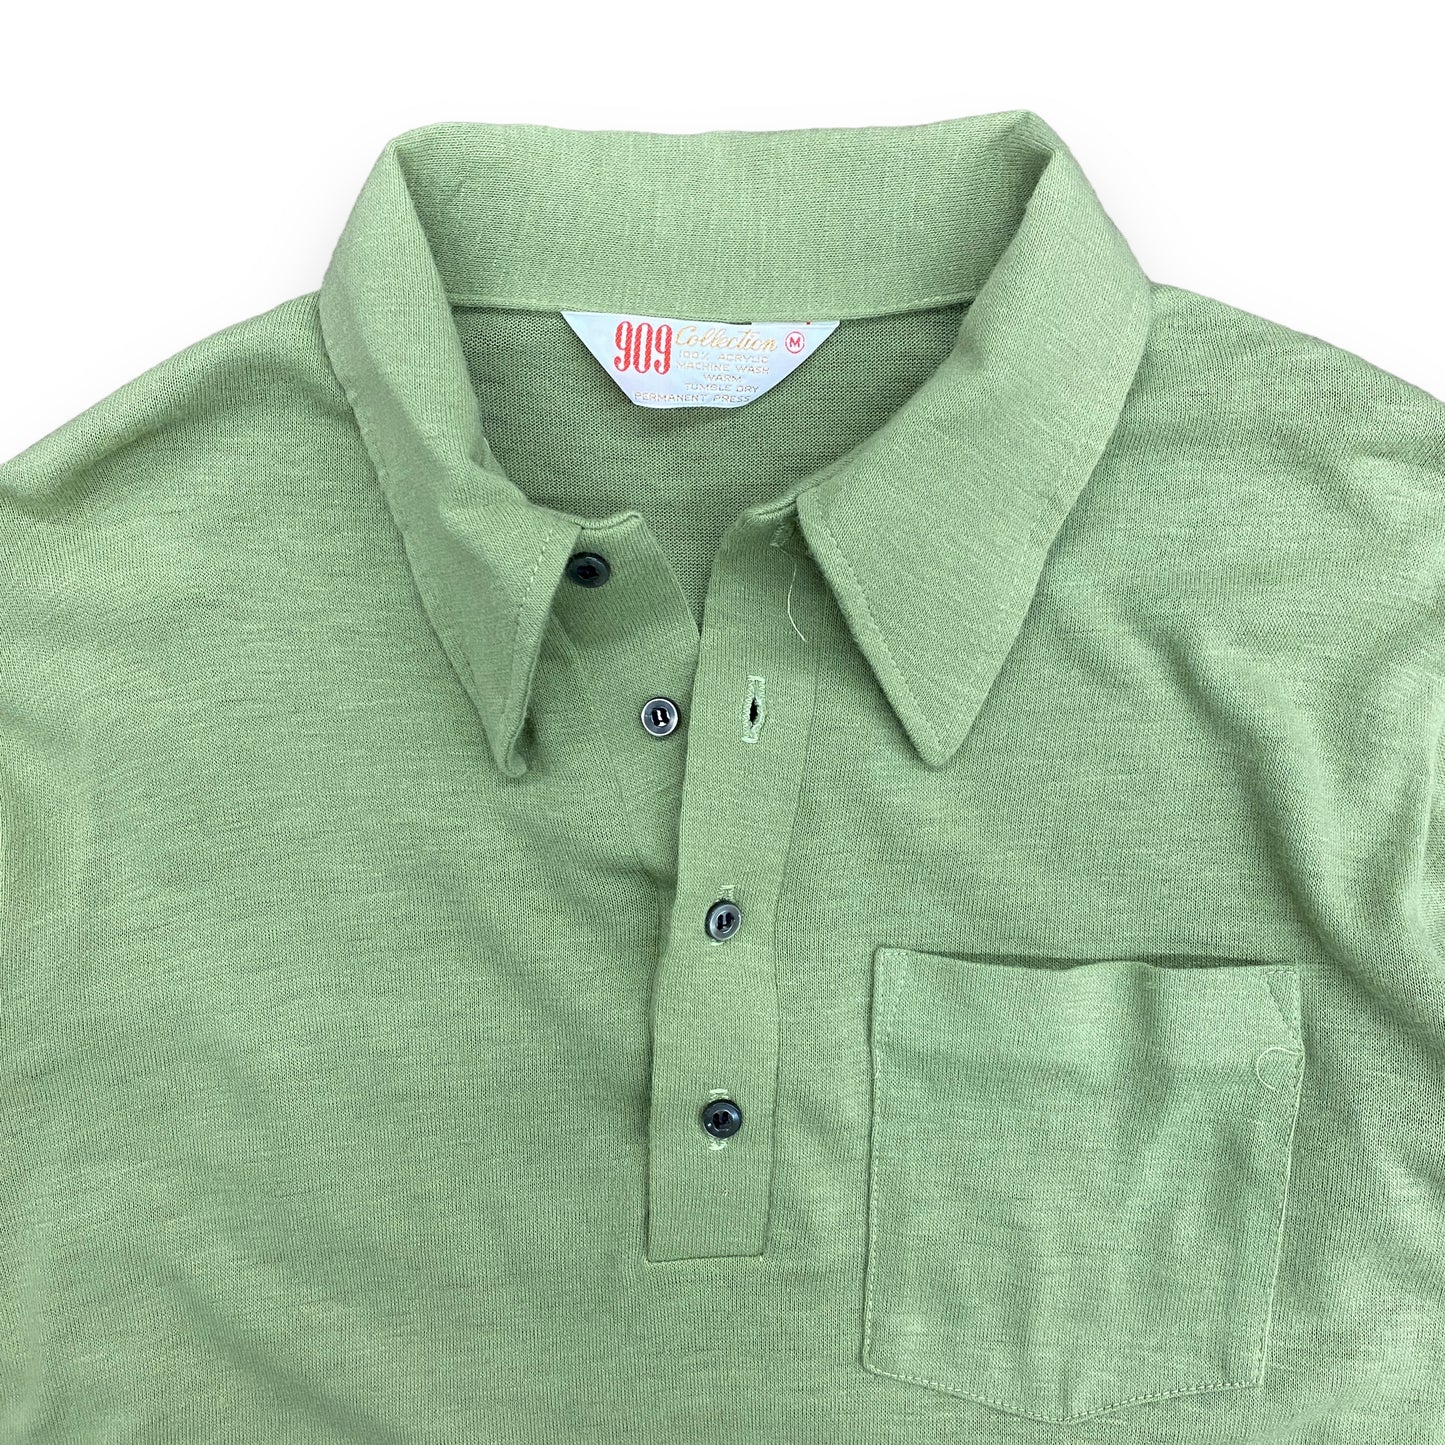 Vintage 1970s Sage Green Long Sleeve Polo - Size Medium